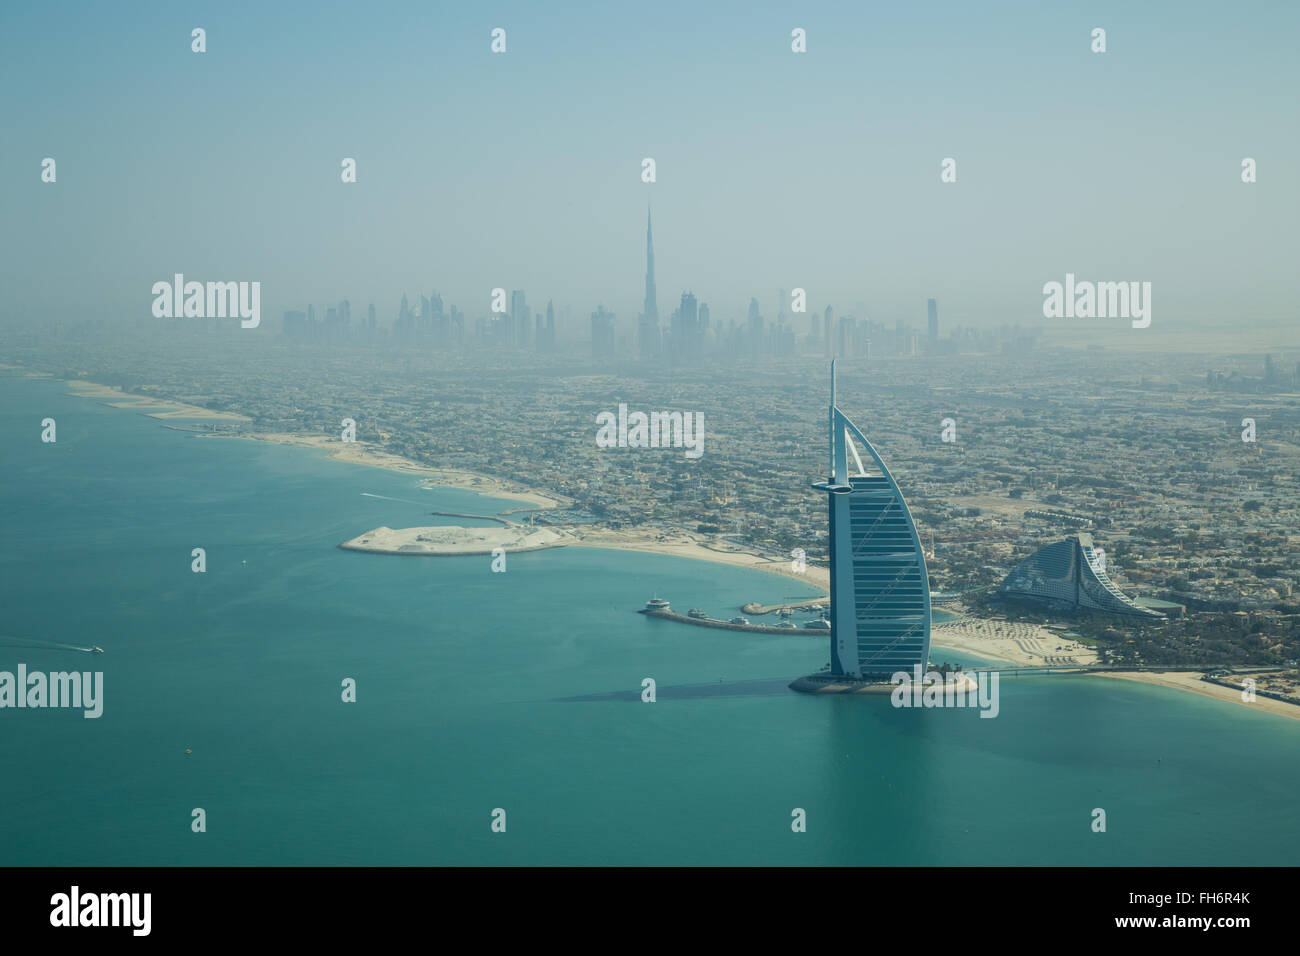 Dubai, United Arab Emirates - October 17, 2014: Photograph of the famous Burj Al Arab hotel in Dubai taken from a seaplane. Stock Photo